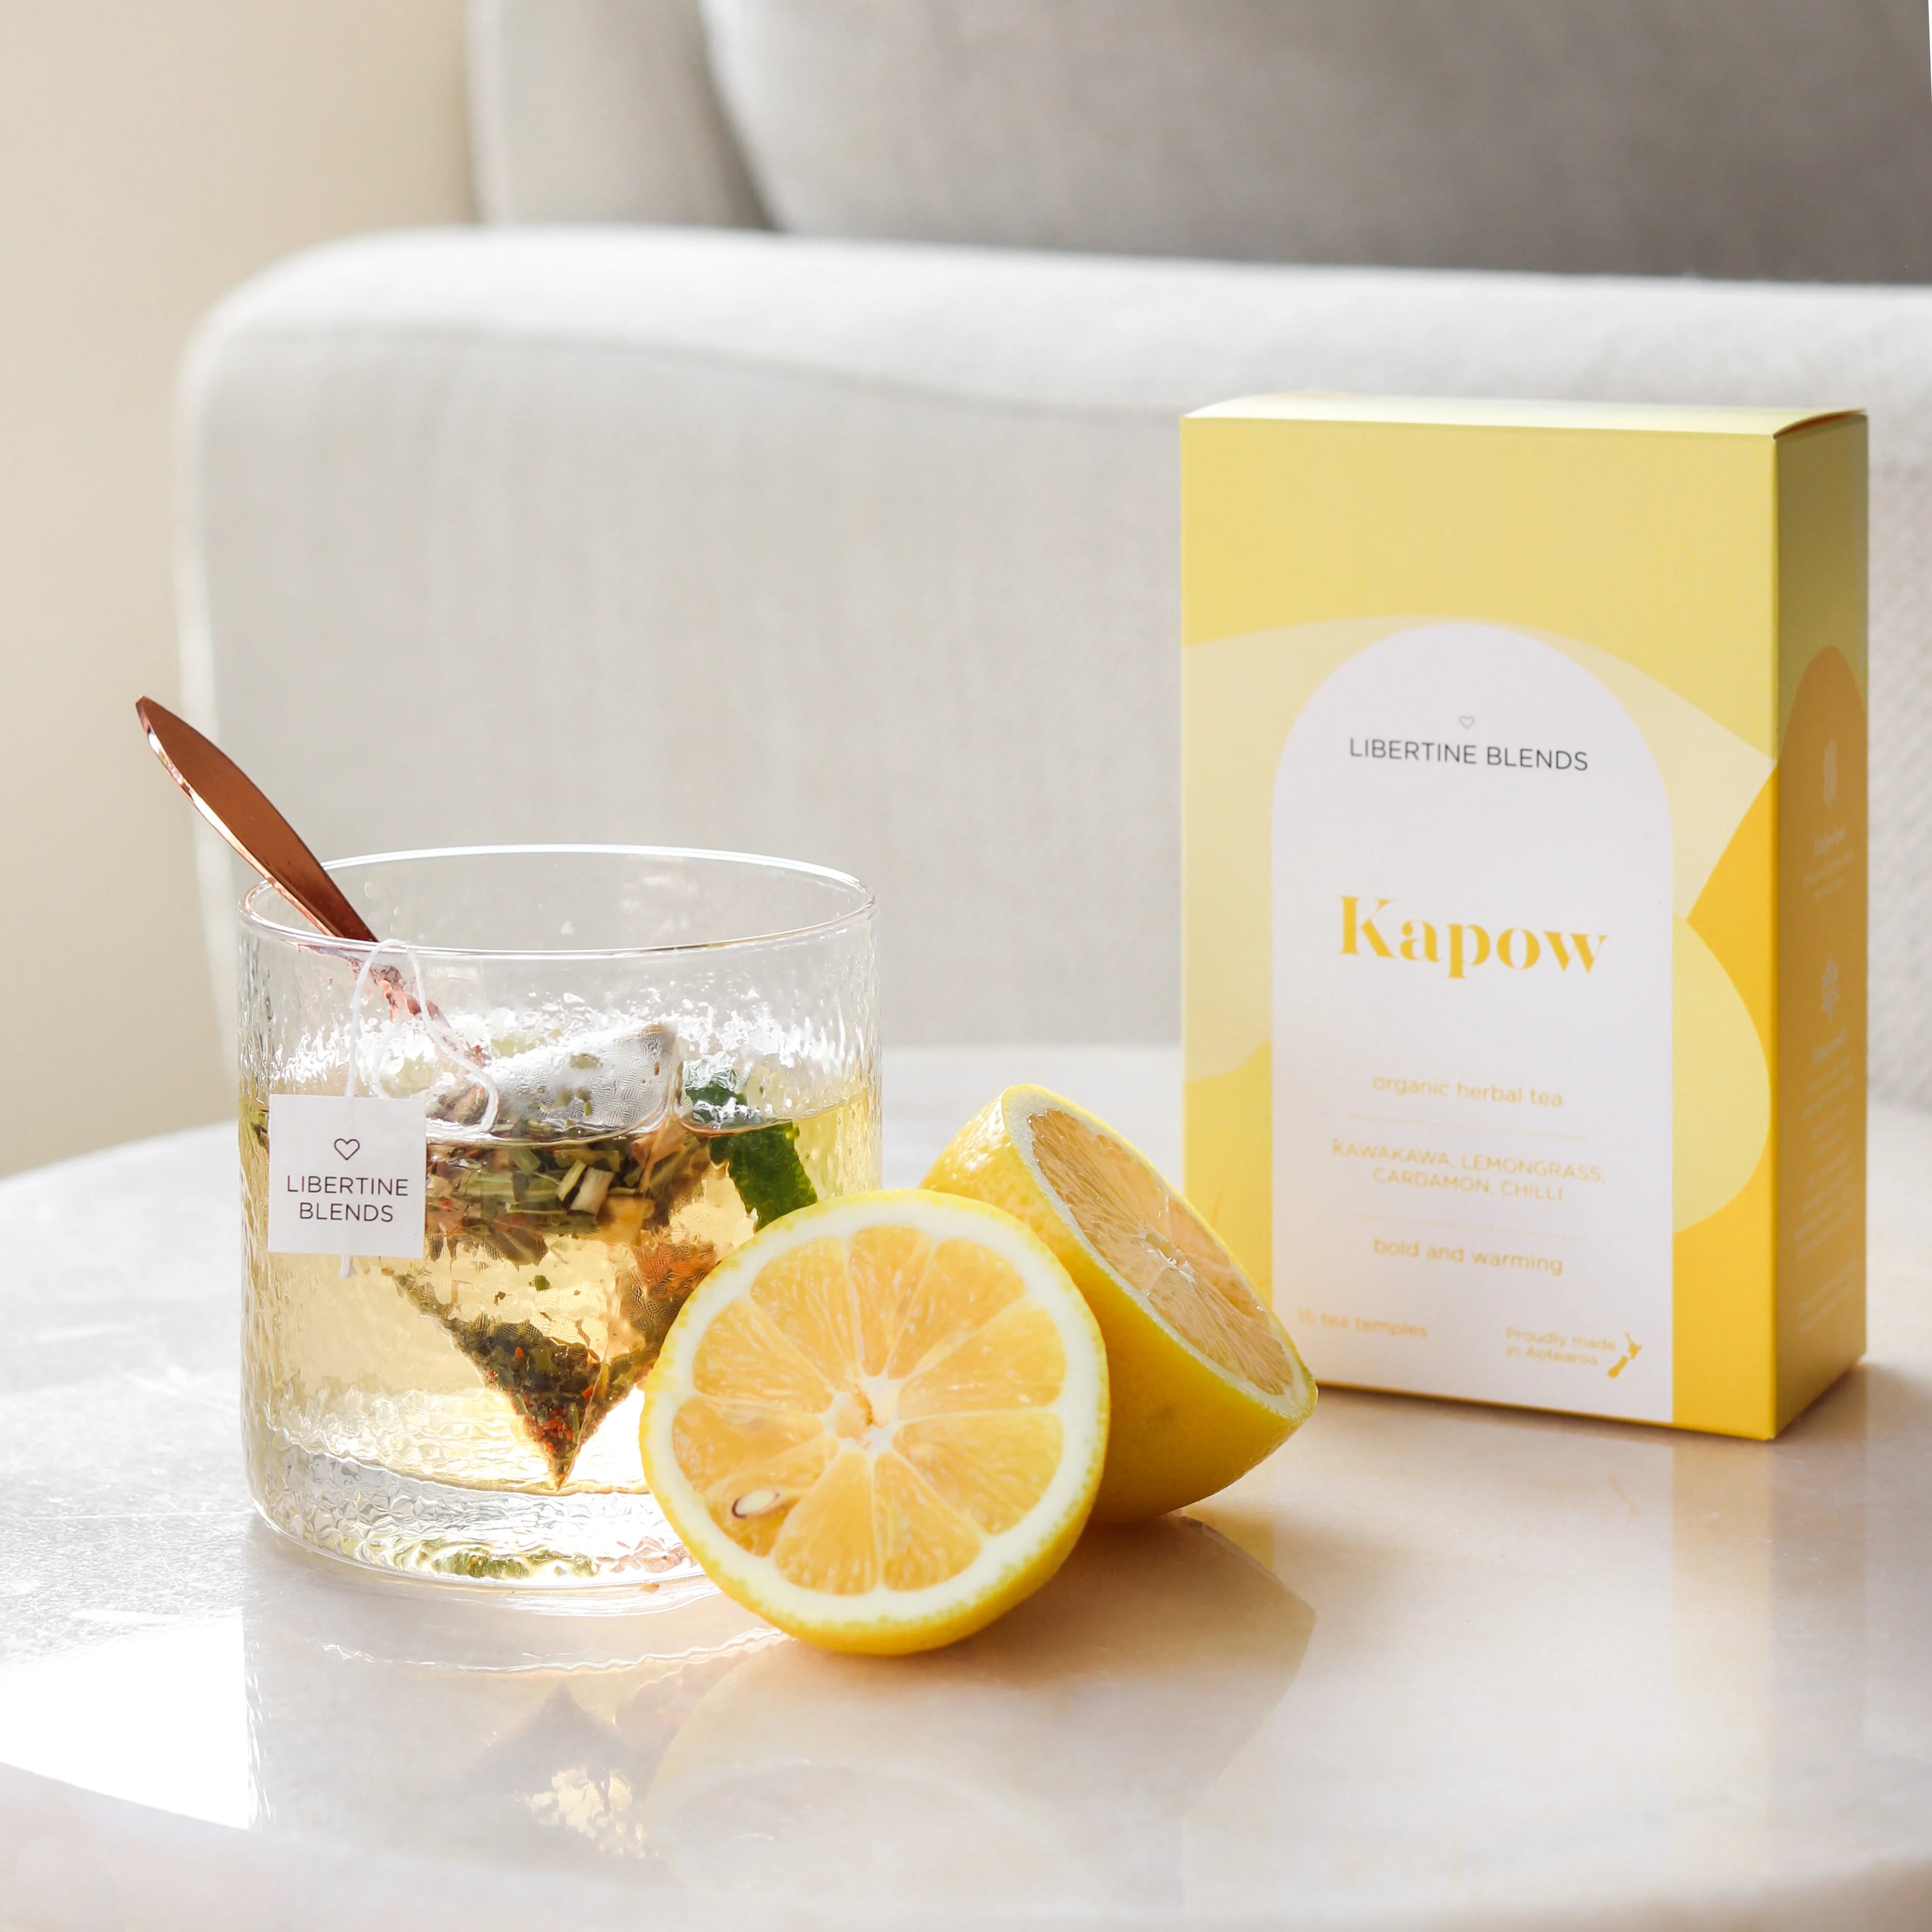 Libertine Blend Kapow Herbal Tea - Tea Temples